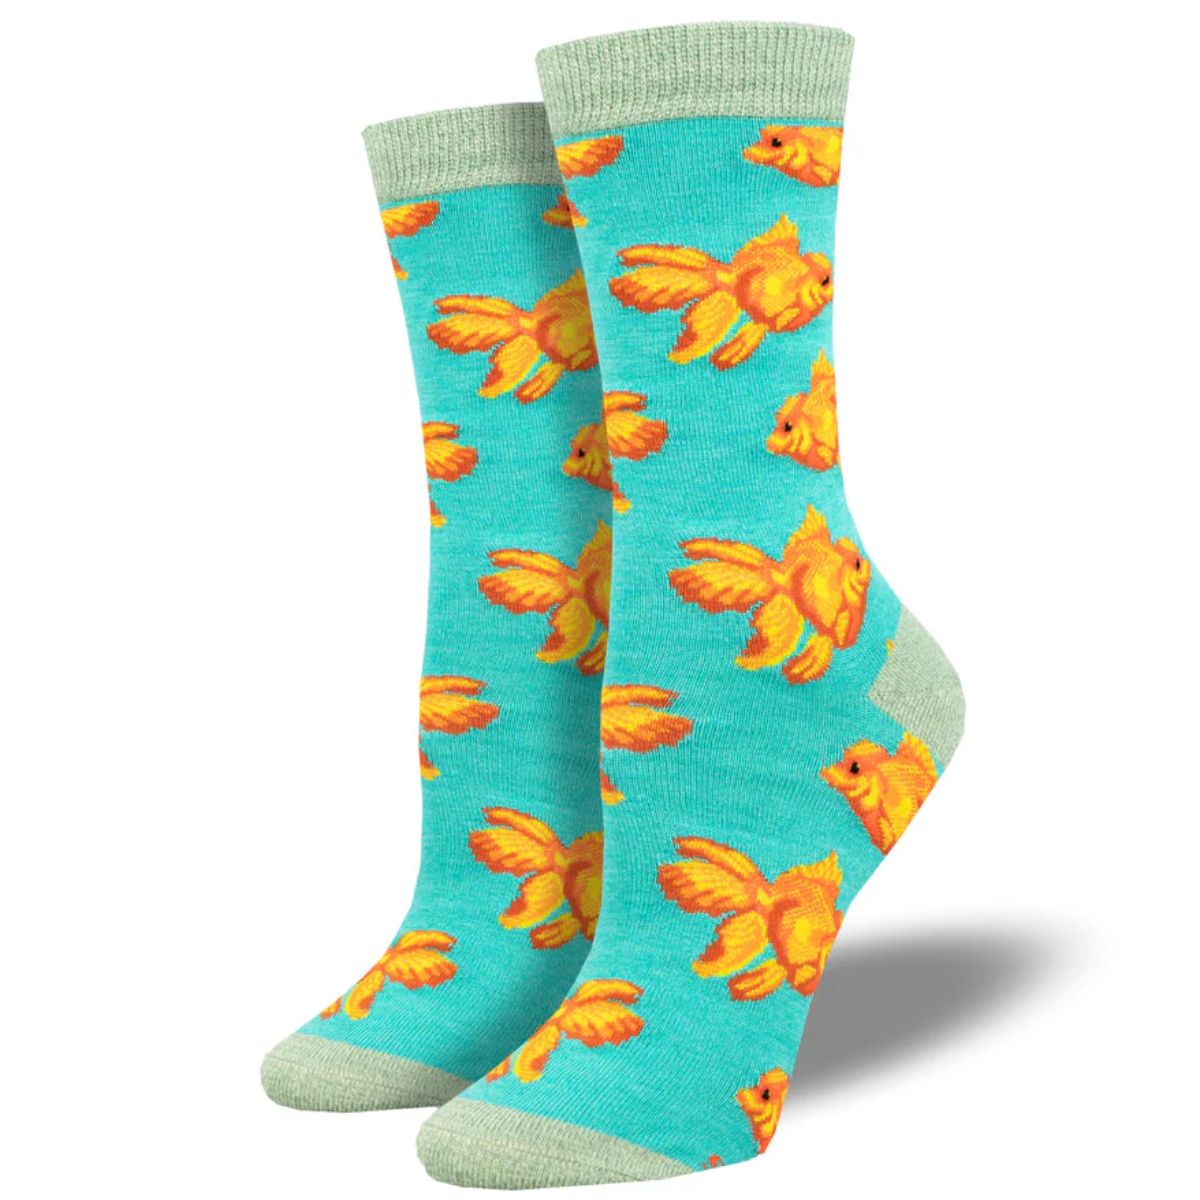 Goldfish socks a pair of teal green socks with goldfish print. 